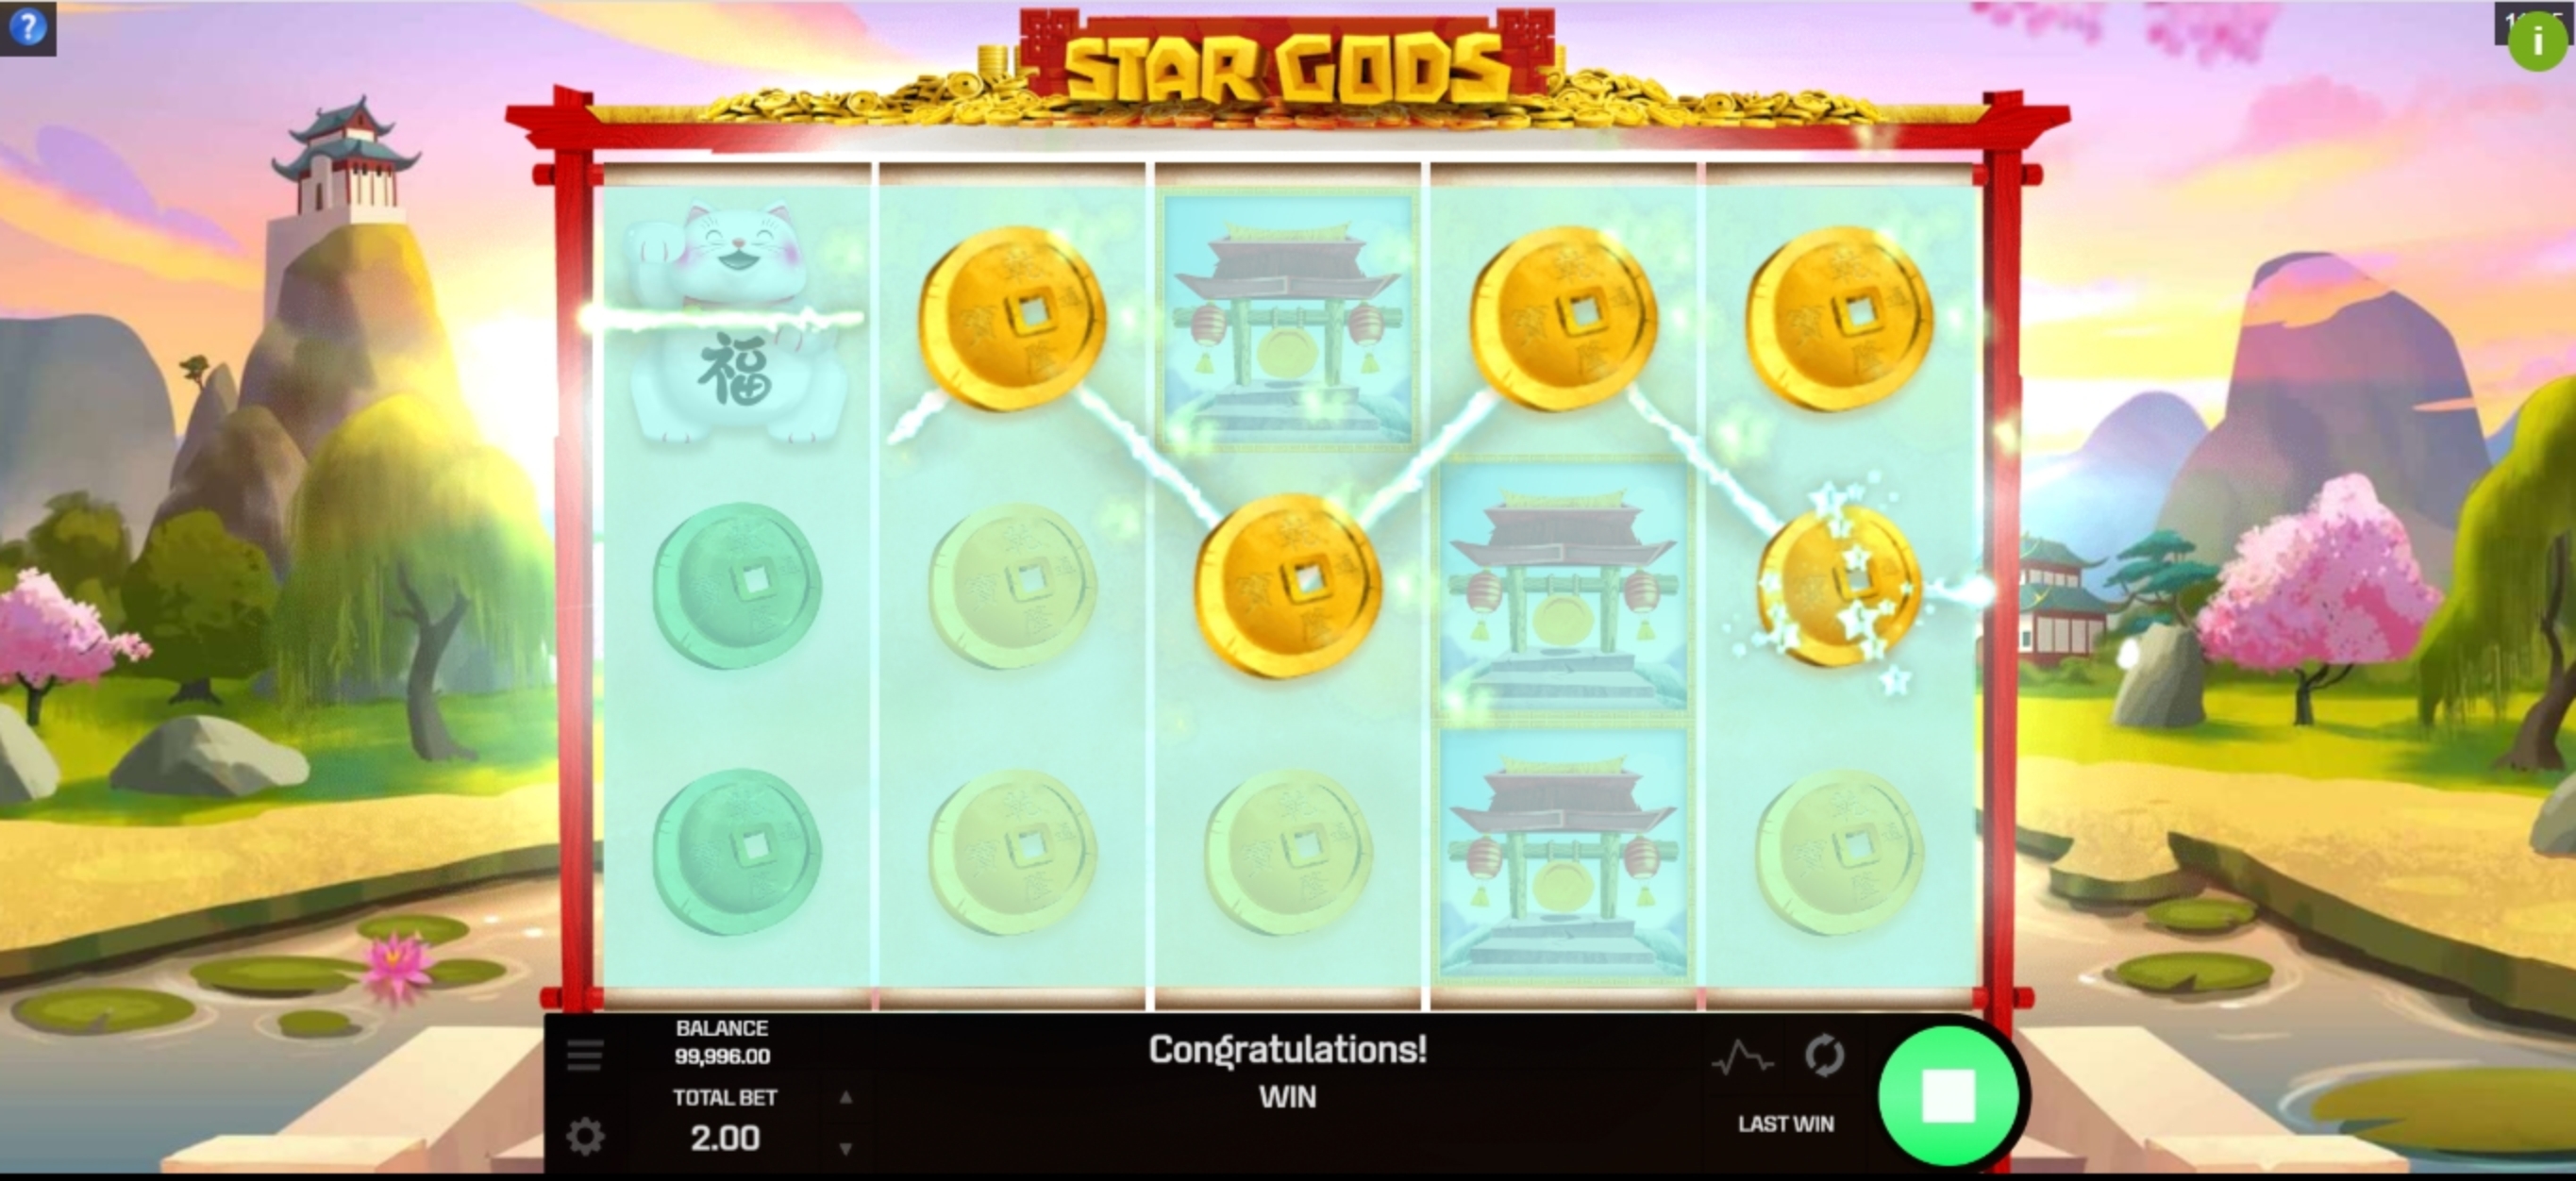 Win Money in Star Gods Free Slot Game by Golden Rock Studios